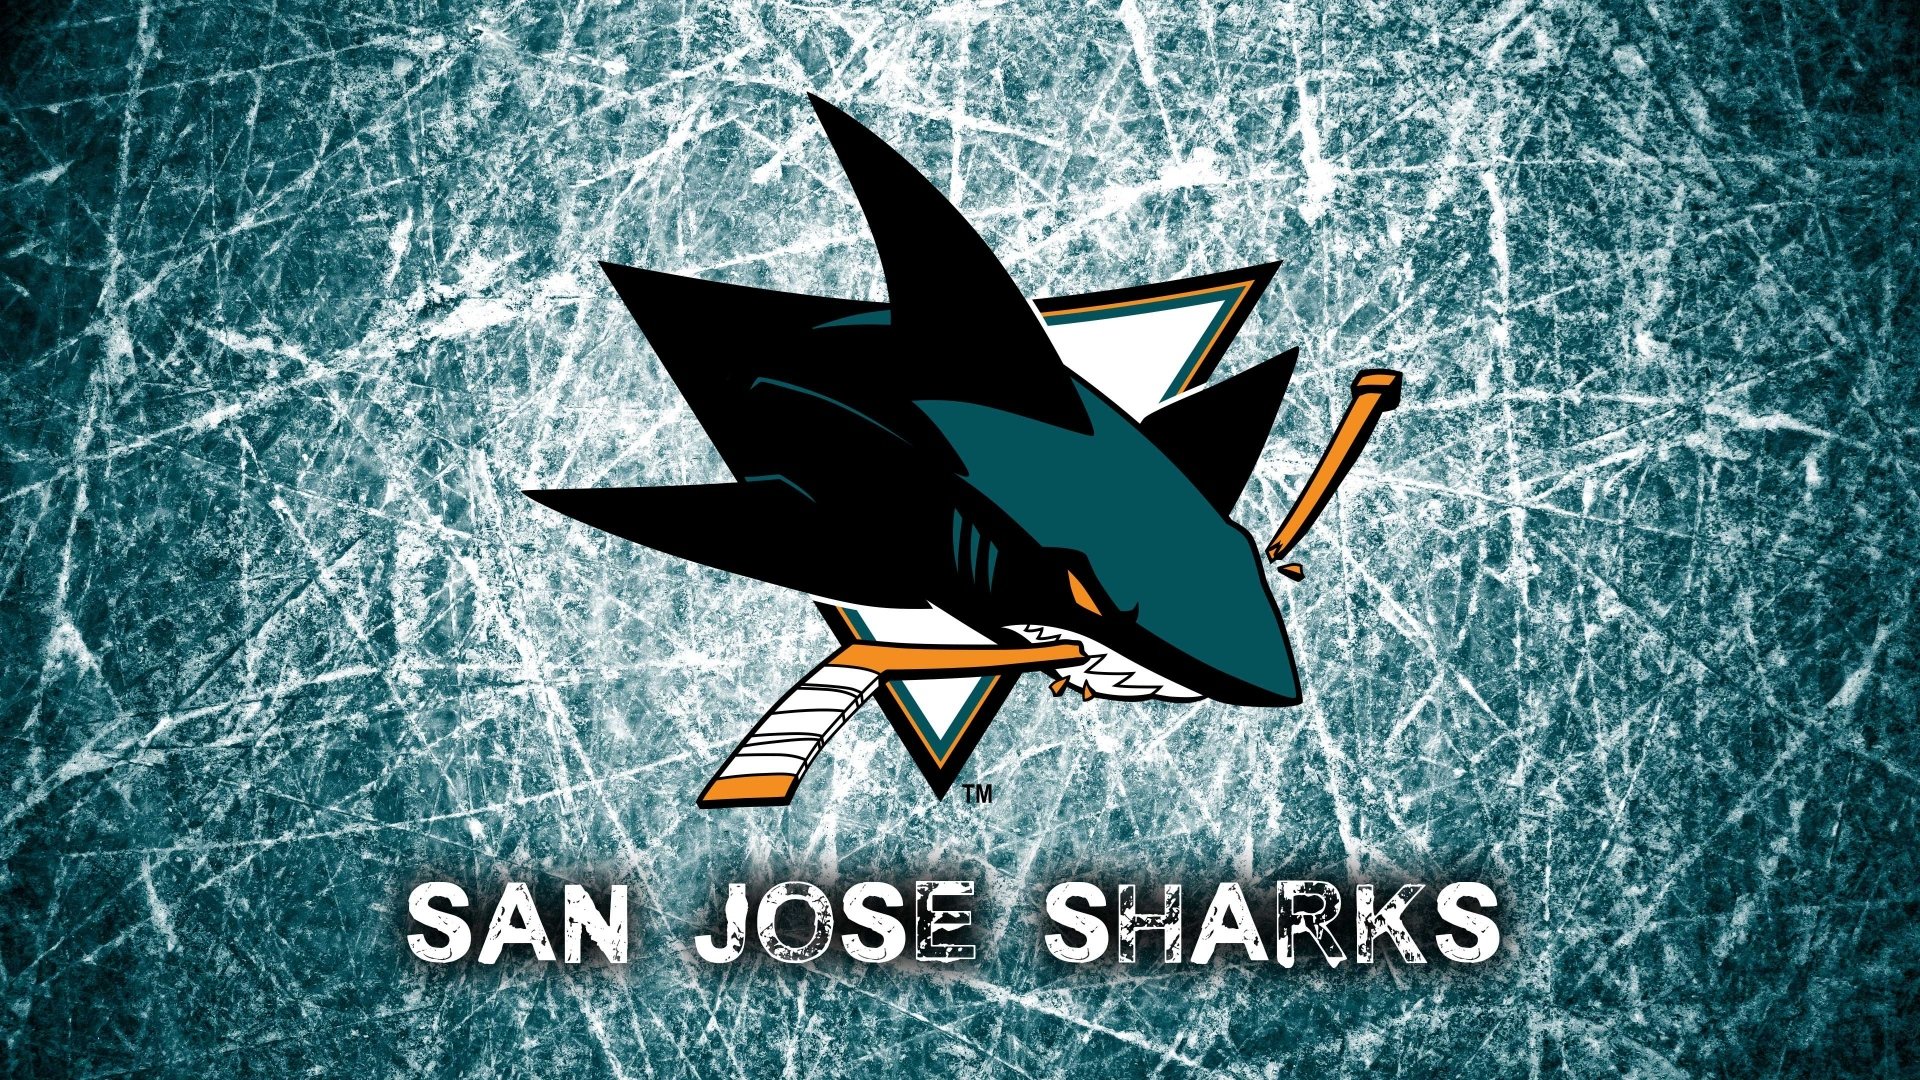 2023 San Jose Sharks wallpaper – Pro Sports Backgrounds